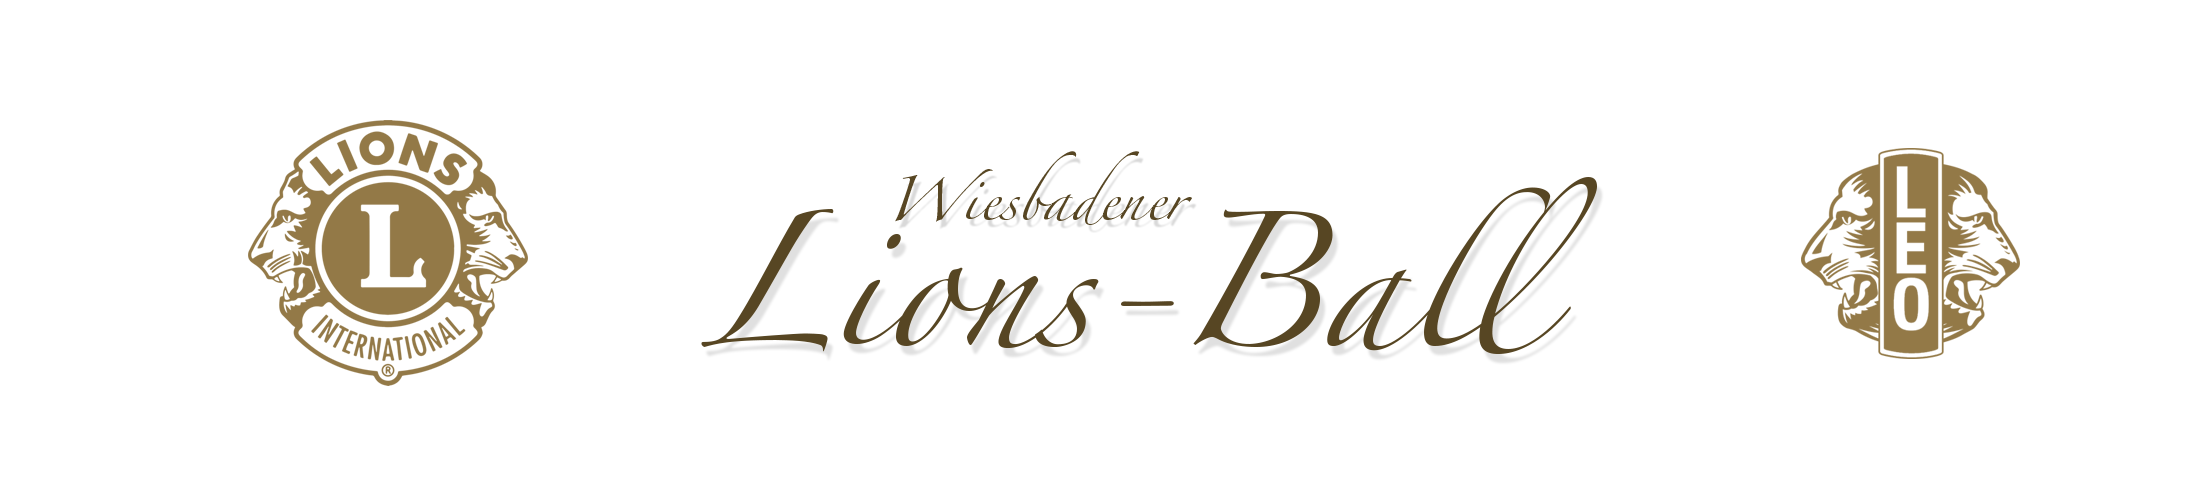 Wiesbadener Lions-Ball